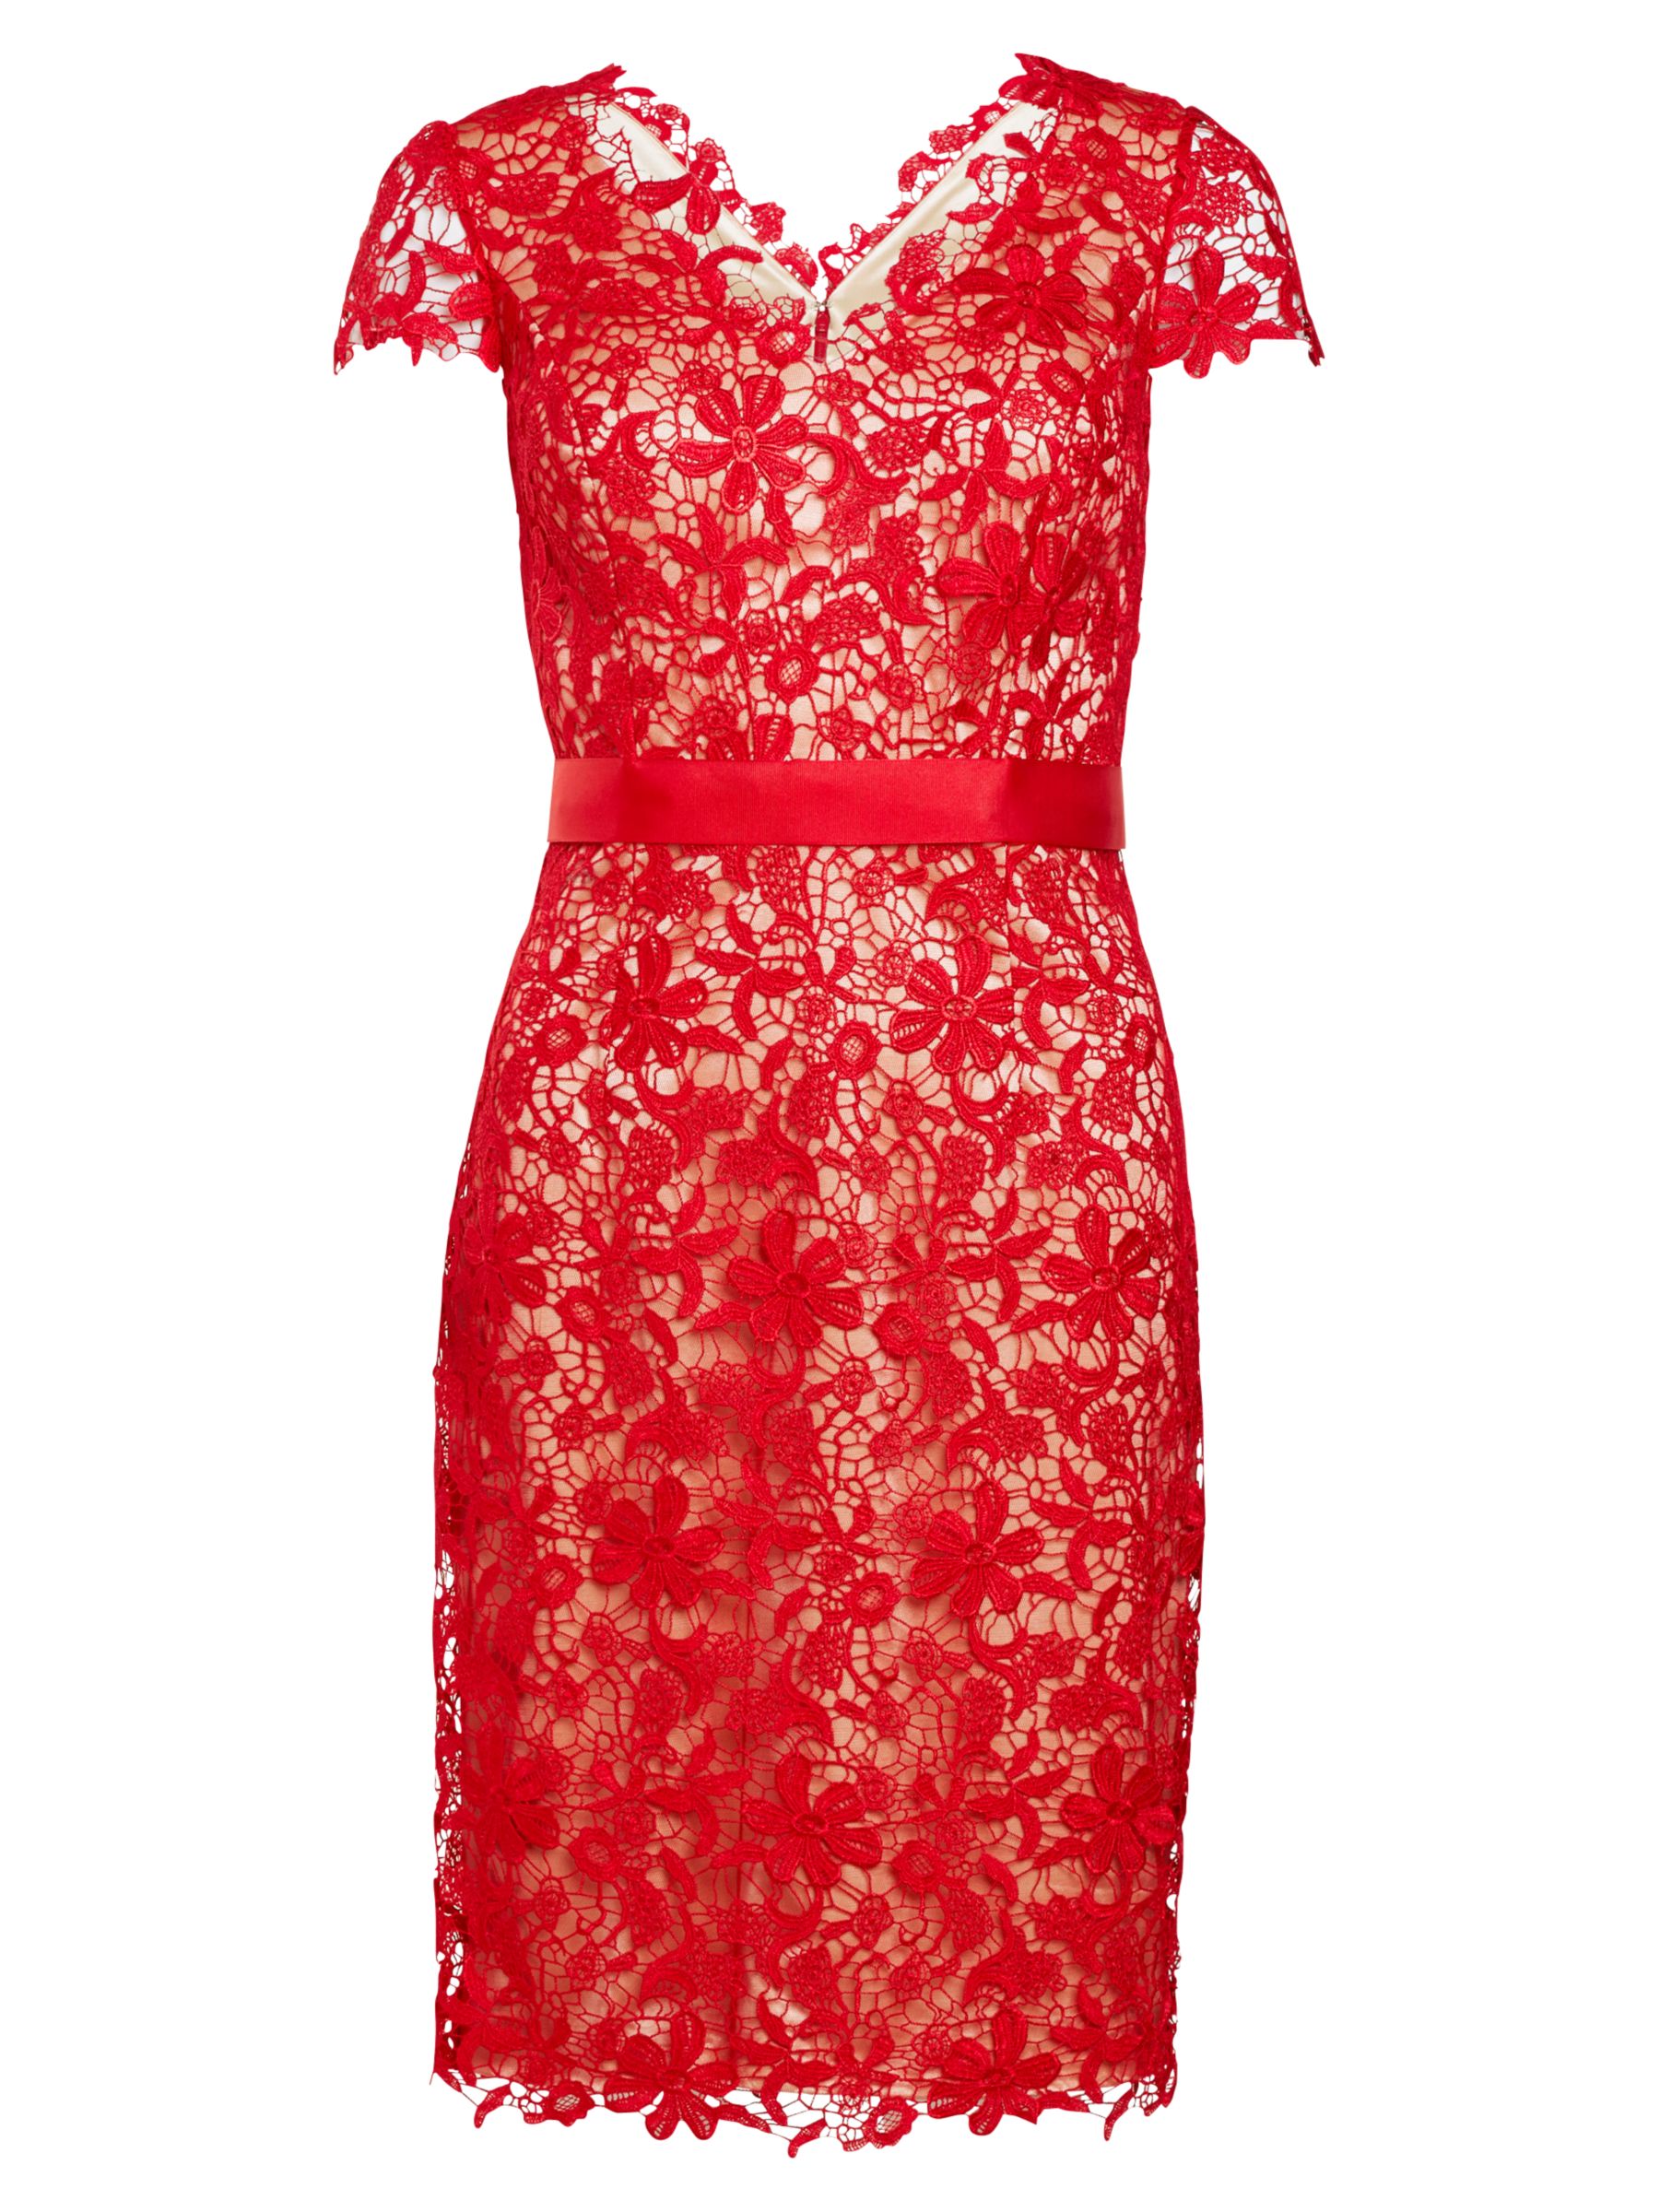 Gina Bacconi Grosgrain Belt Lace Dress, Red at John Lewis & Partners